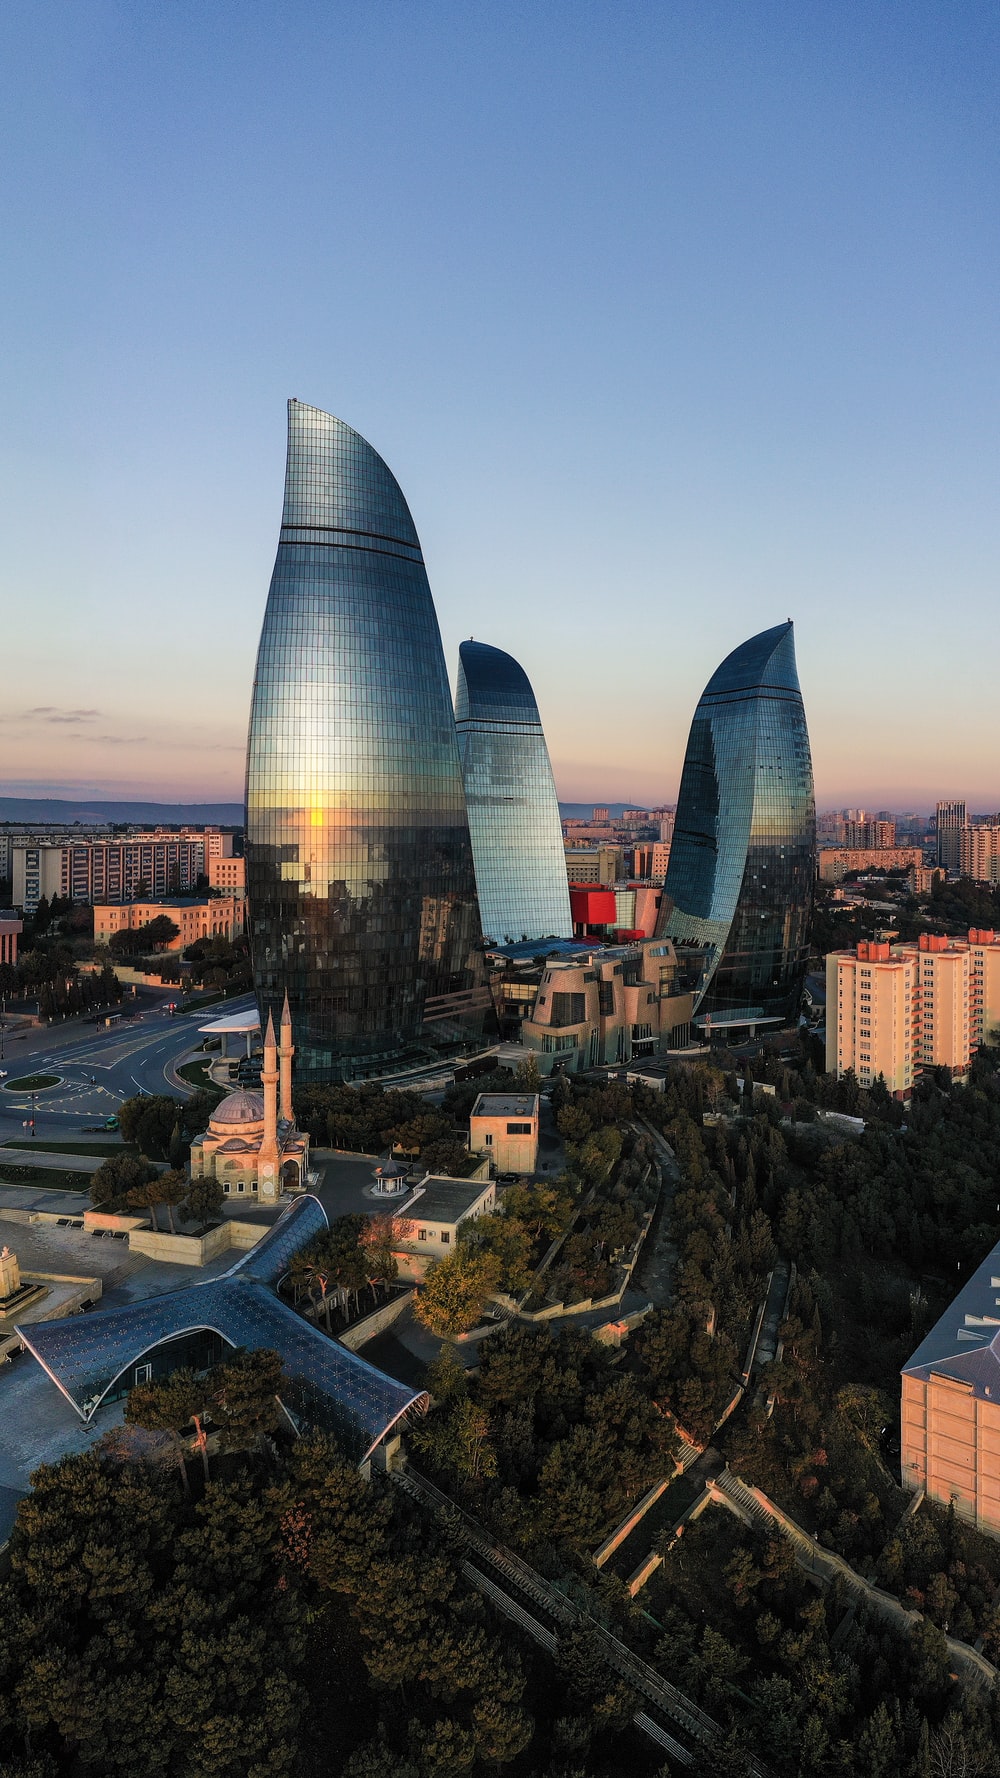 Baku Pictures Image